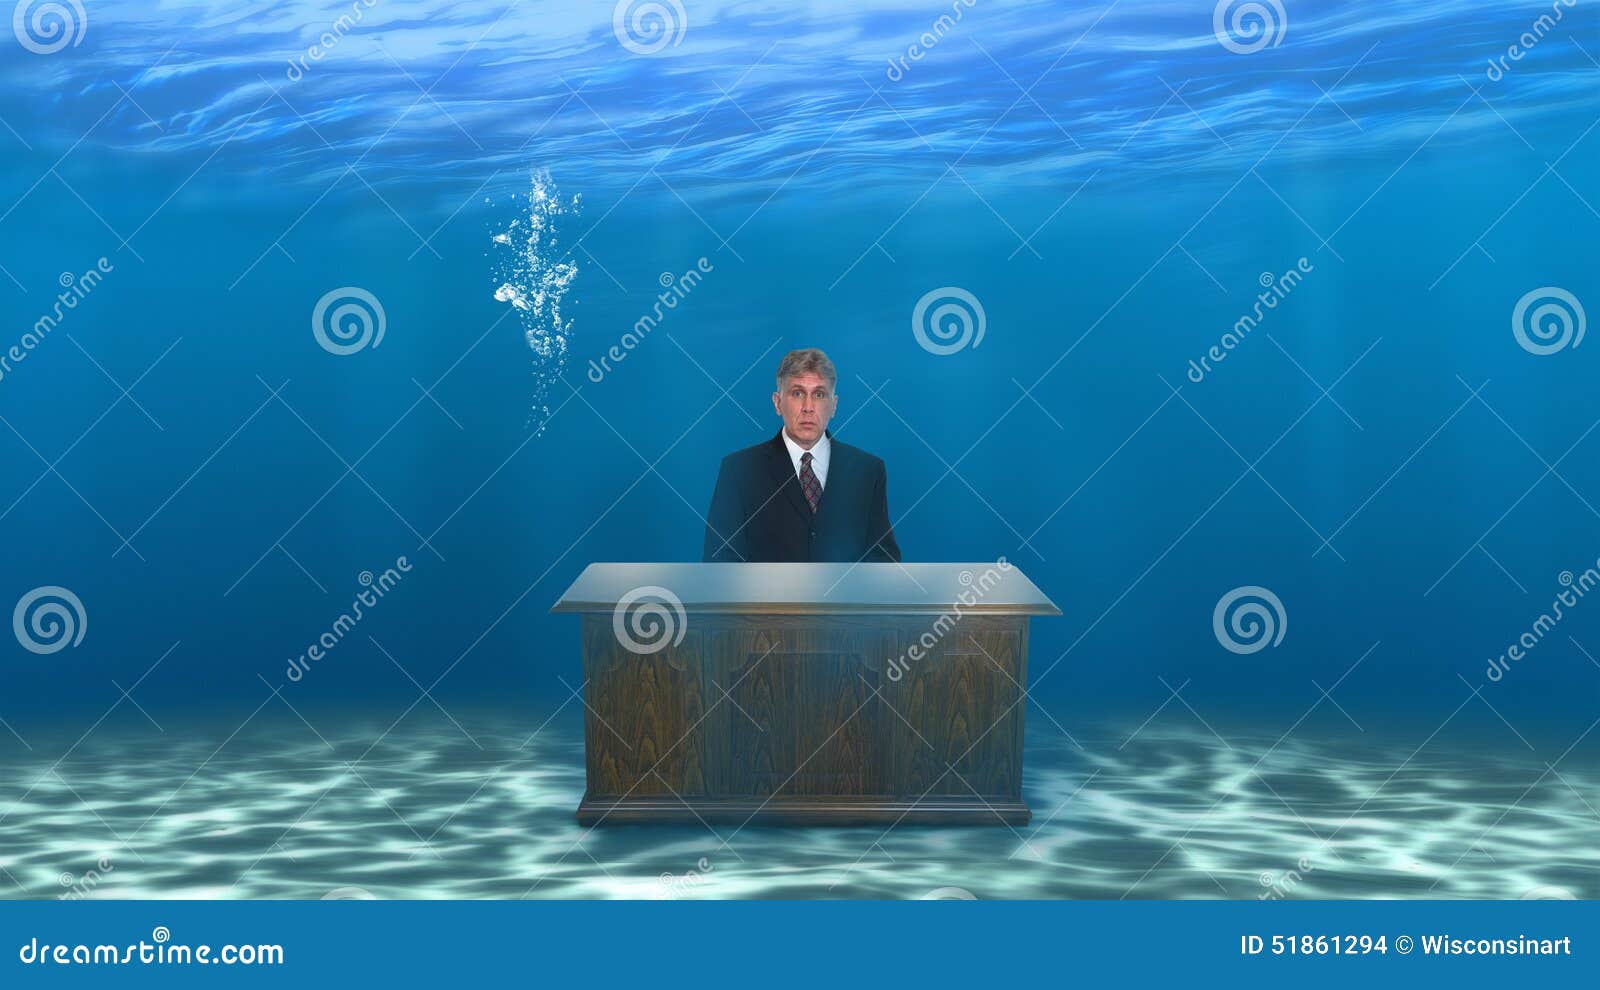 Business Sales Marketing Office Underwater Stock Illustration